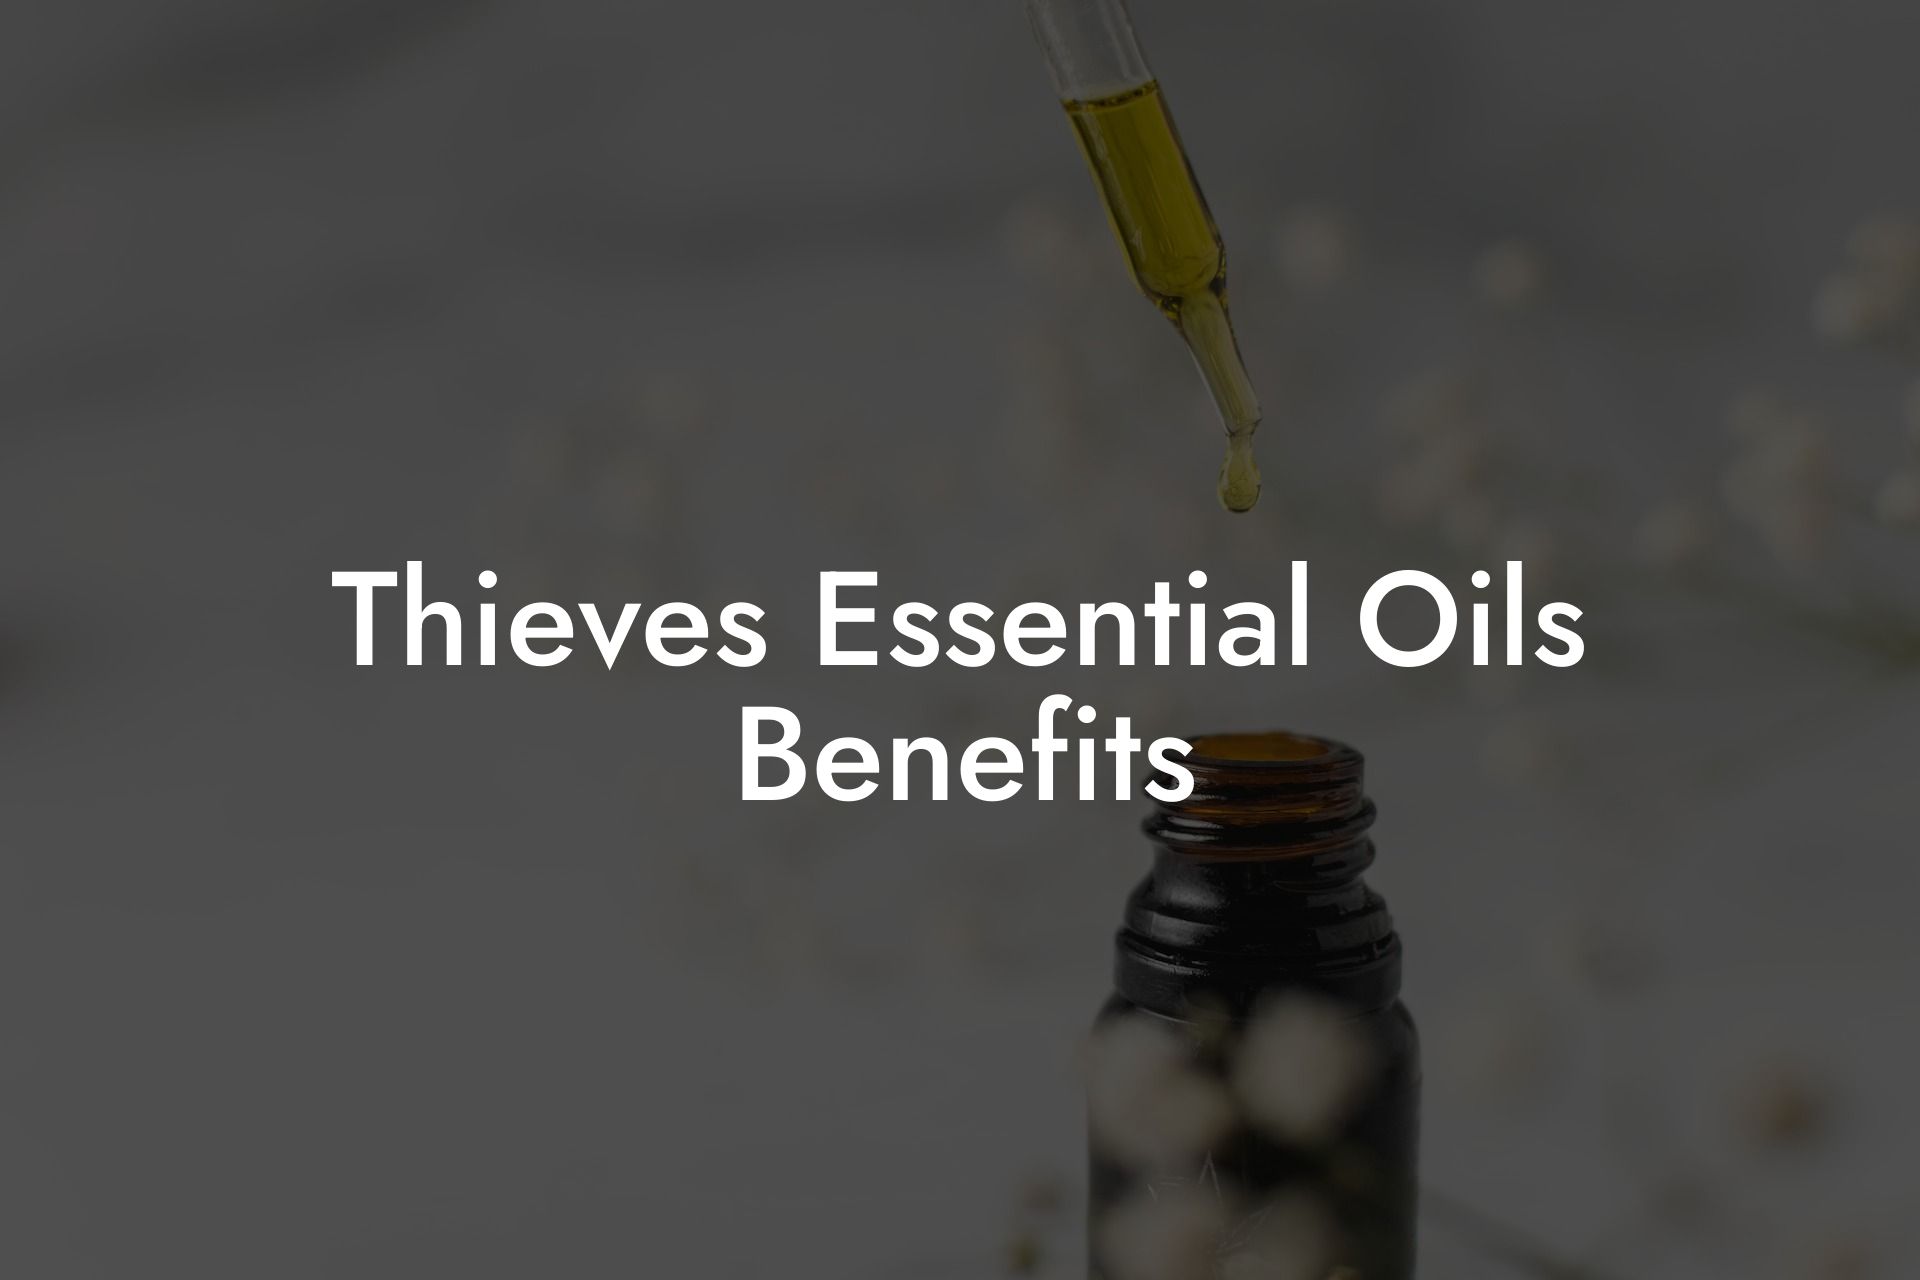 Thieves Essential Oils Benefits